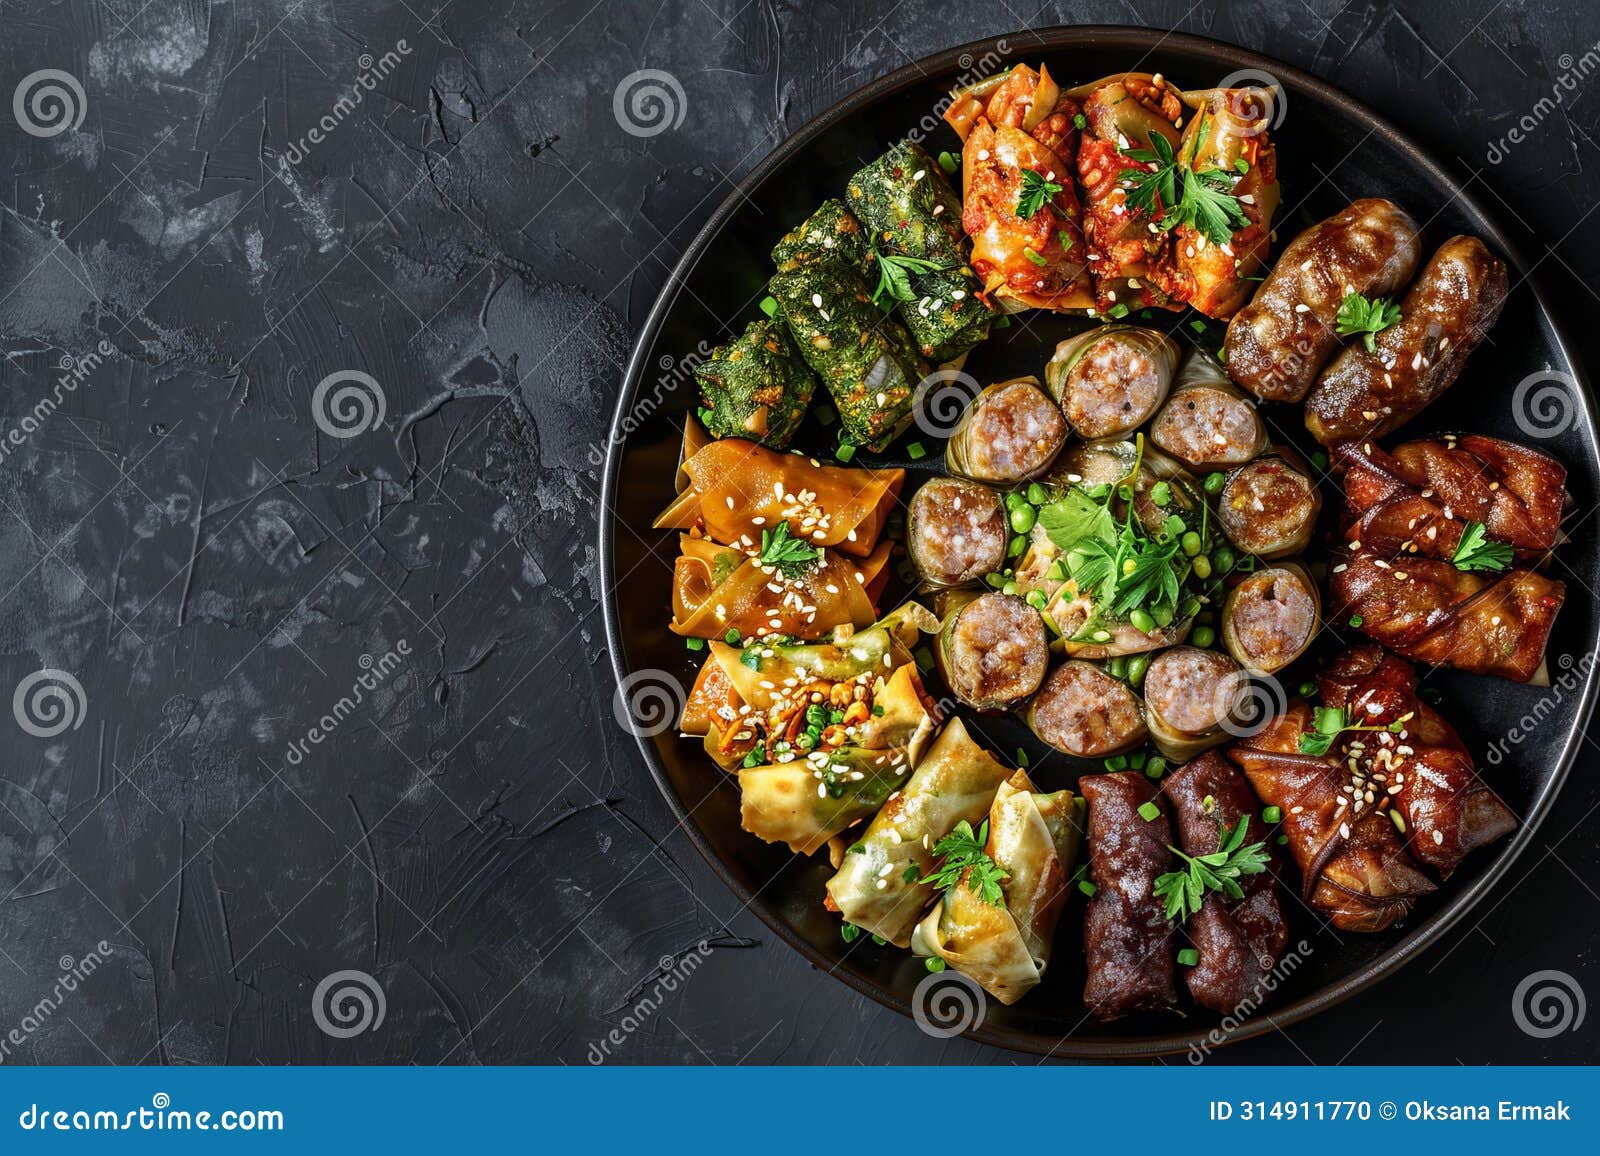 asian set with kazy and dolma, sarma, dolmades, dolmadakia or tolma stuffed with lamb, sausages